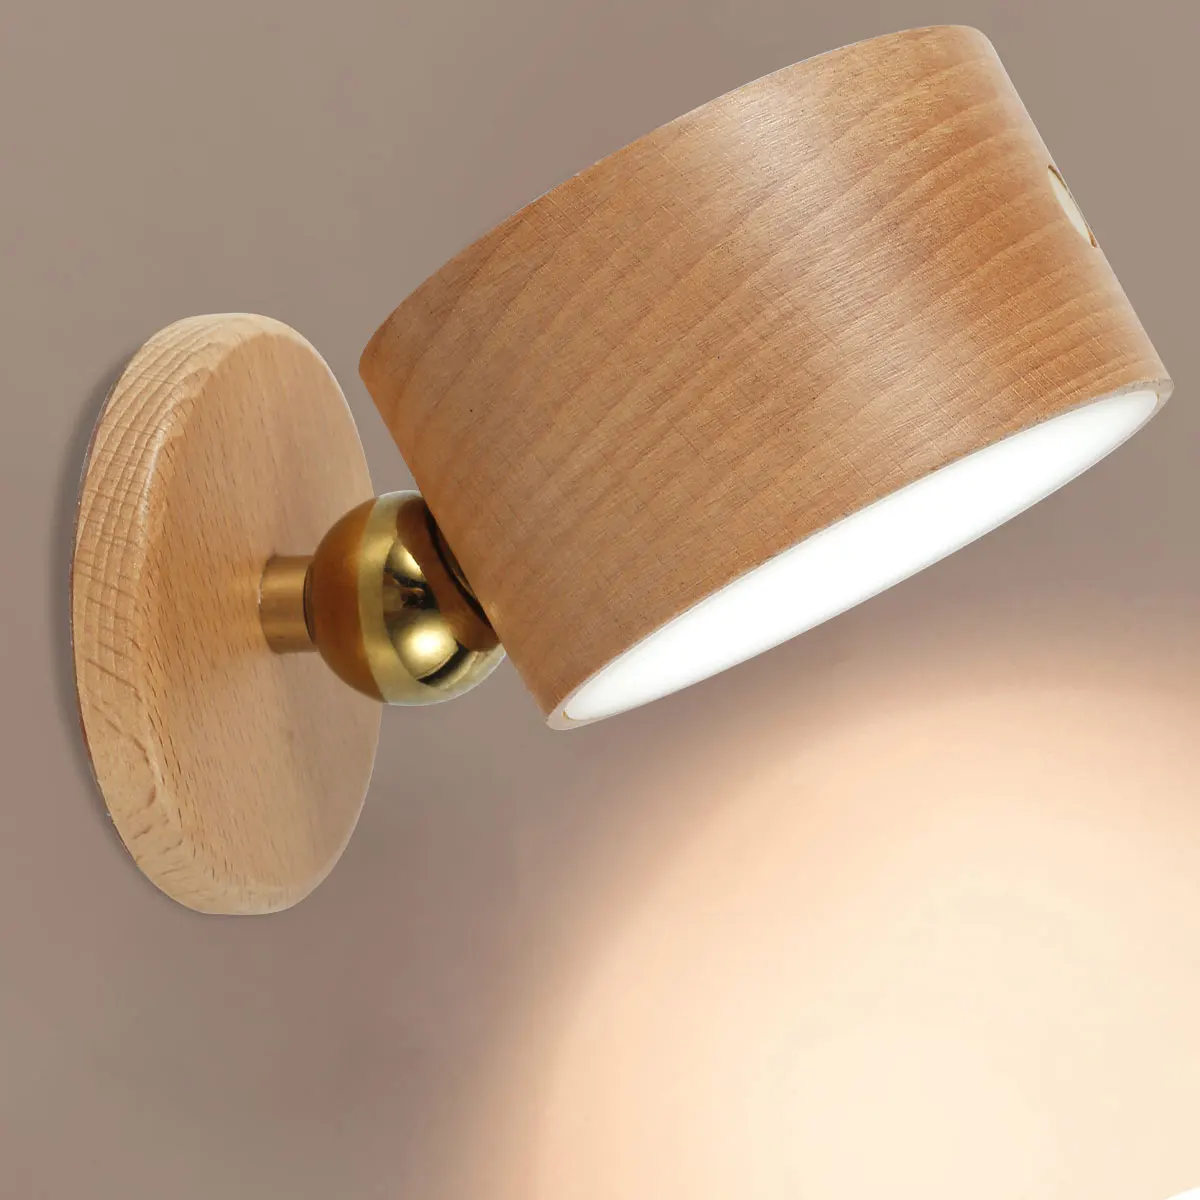 V2com USB Wooden Wall lamp Desk Lamp Touch Dimming LED Night Light 360° Rotating Eye Protection Atmosphere Magnetic Bedside Lamp uae dubai jusinhellife